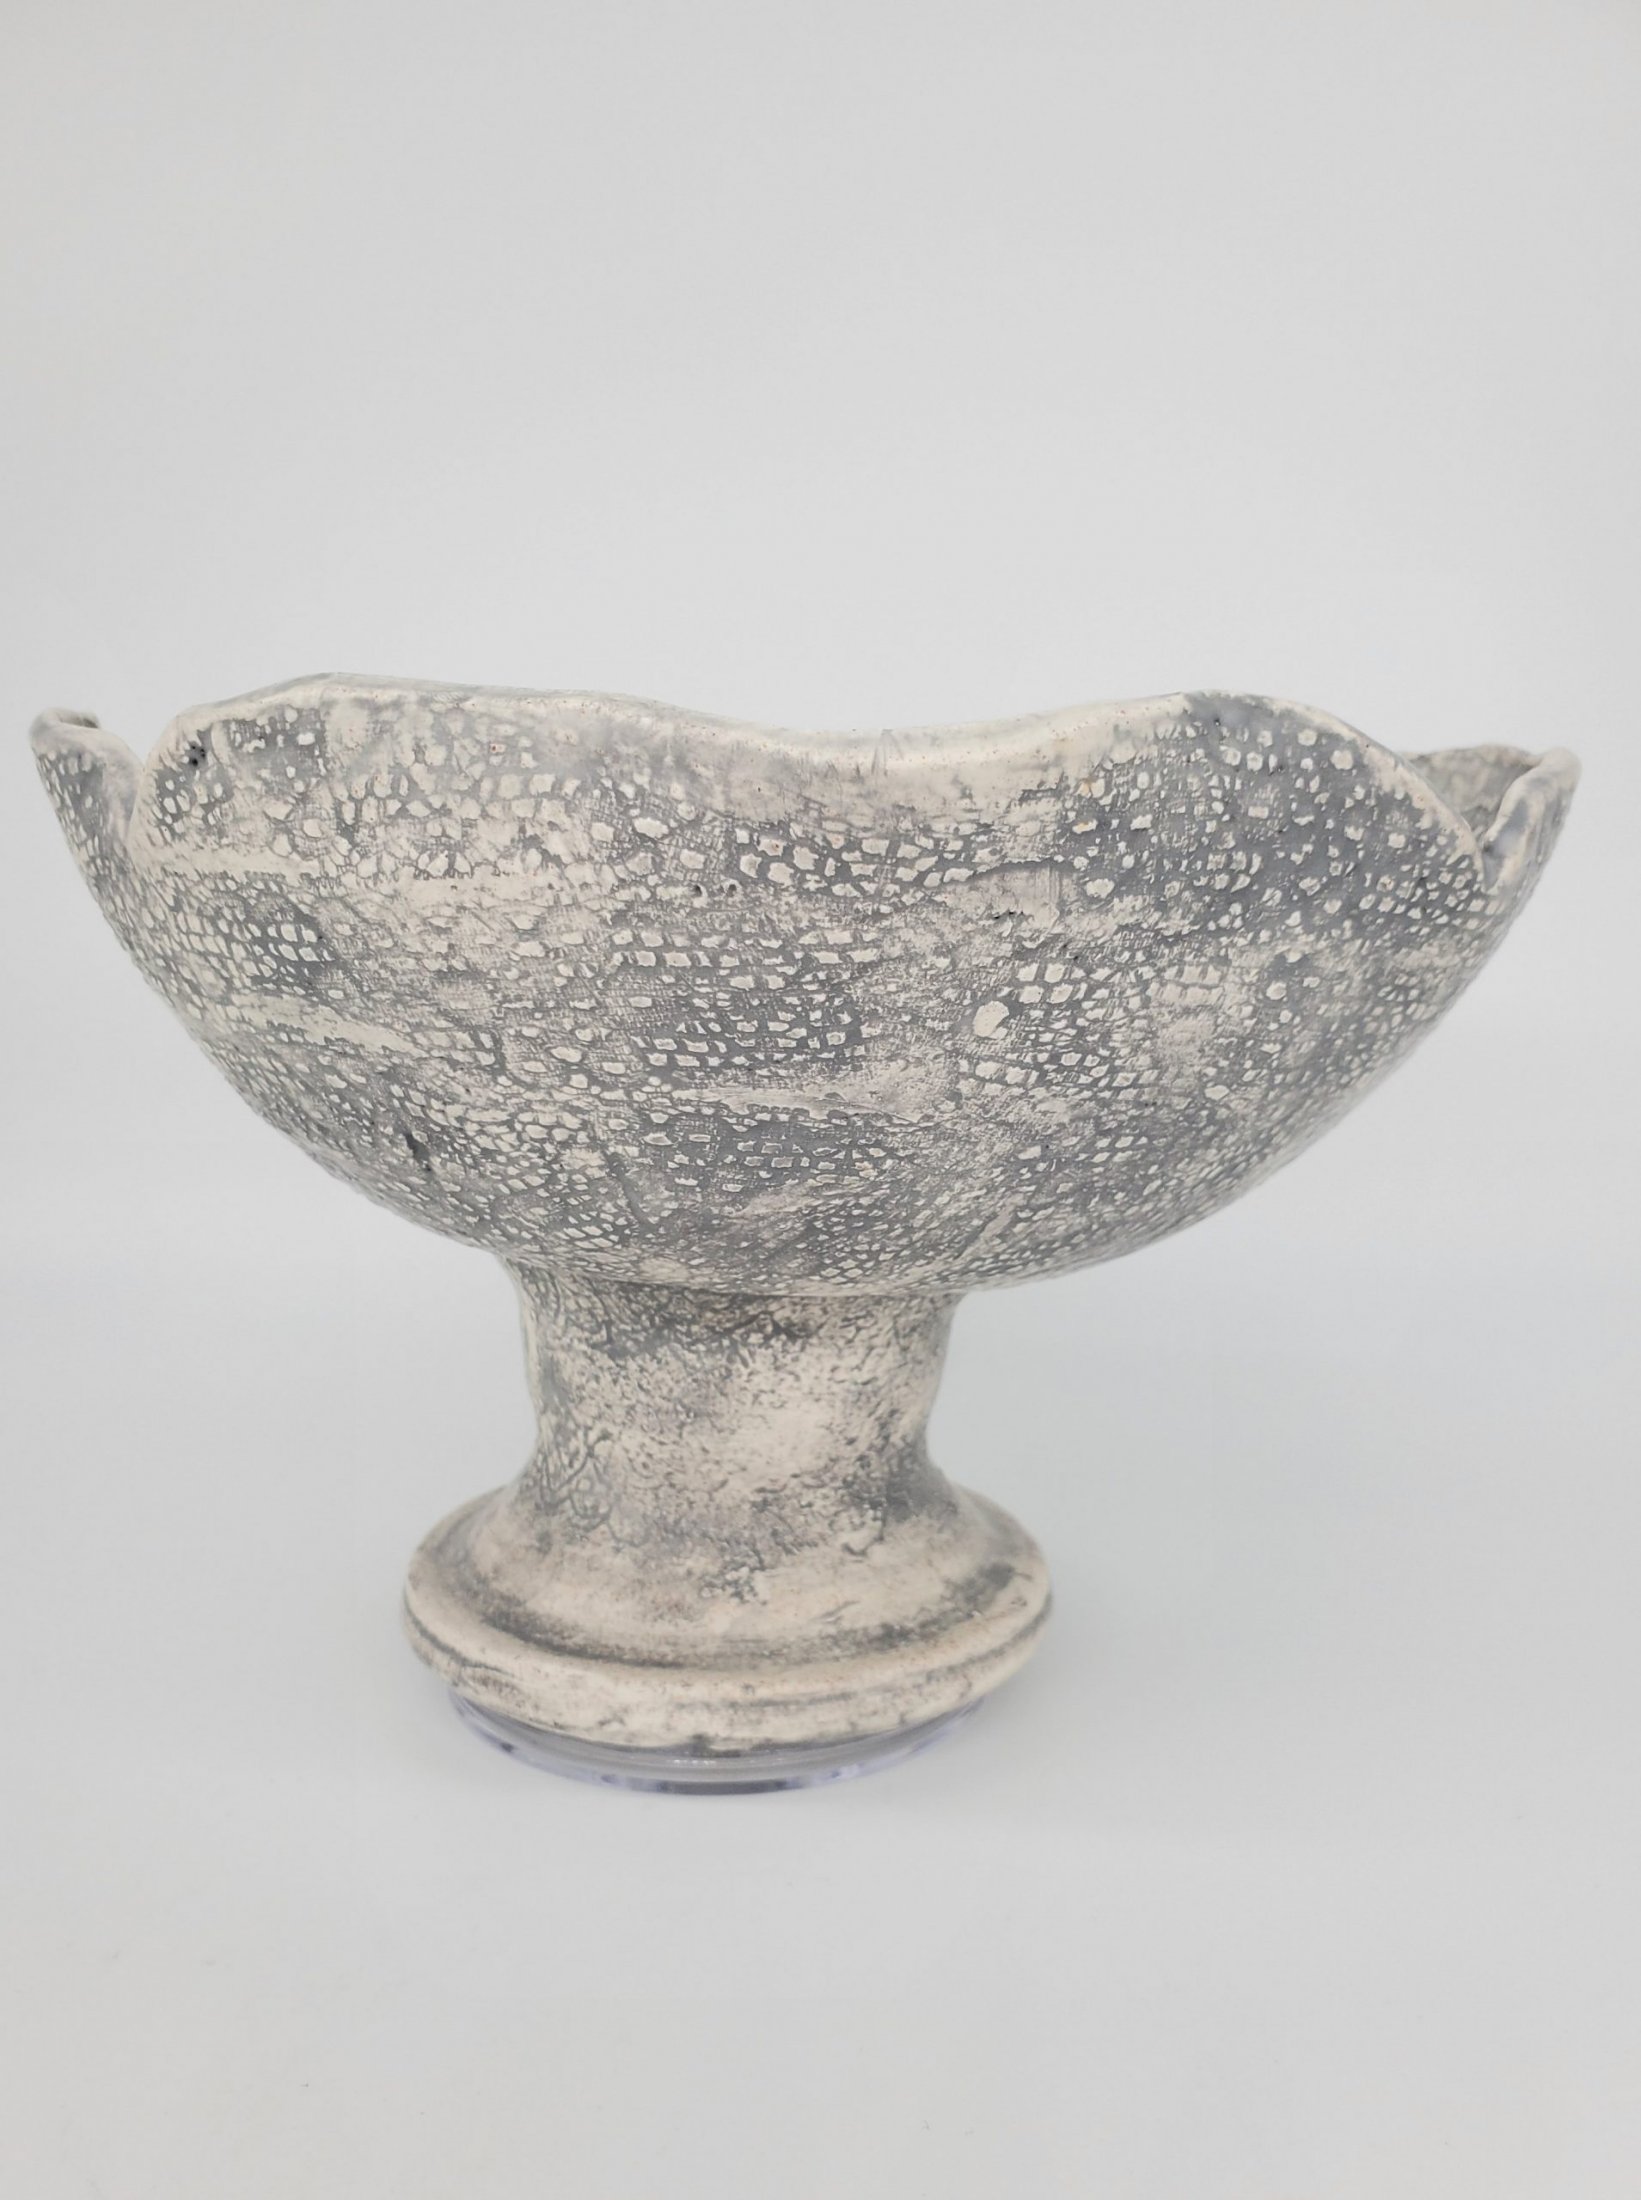 Decorative Slabbed Then Sculpted Large Curvy Pretty Decorative Bowl With Underglaze & Clear Glaze